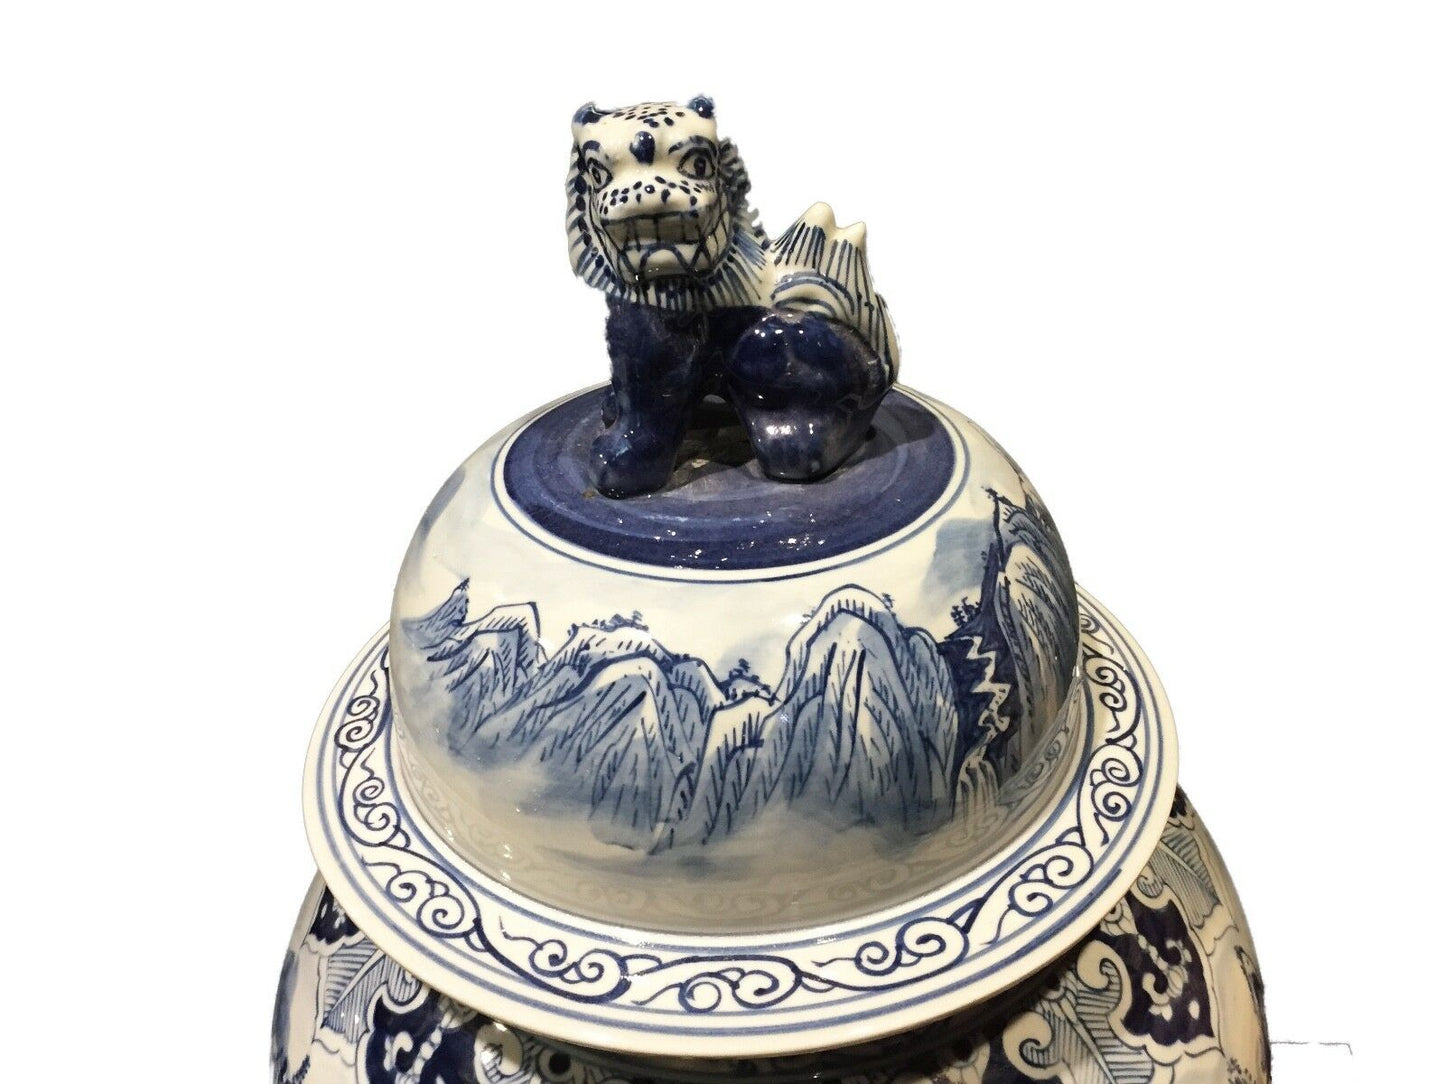 #951 Mansion Size Chinoiserie B & W Porcelain Landscape Ginger Jars - a Pair 36" H